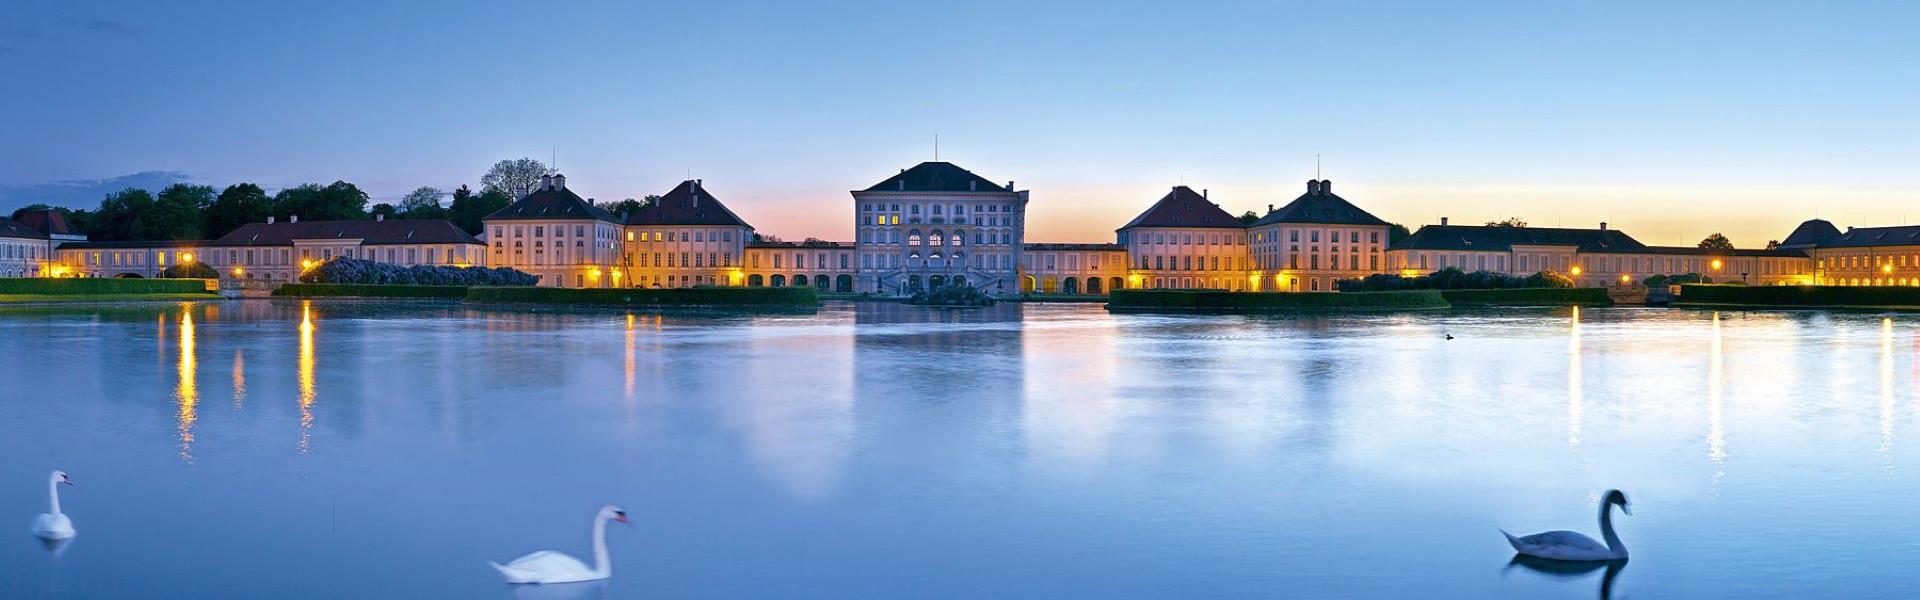 کاخ نیمفنبورگ مونیخ Nymphenburg Palace